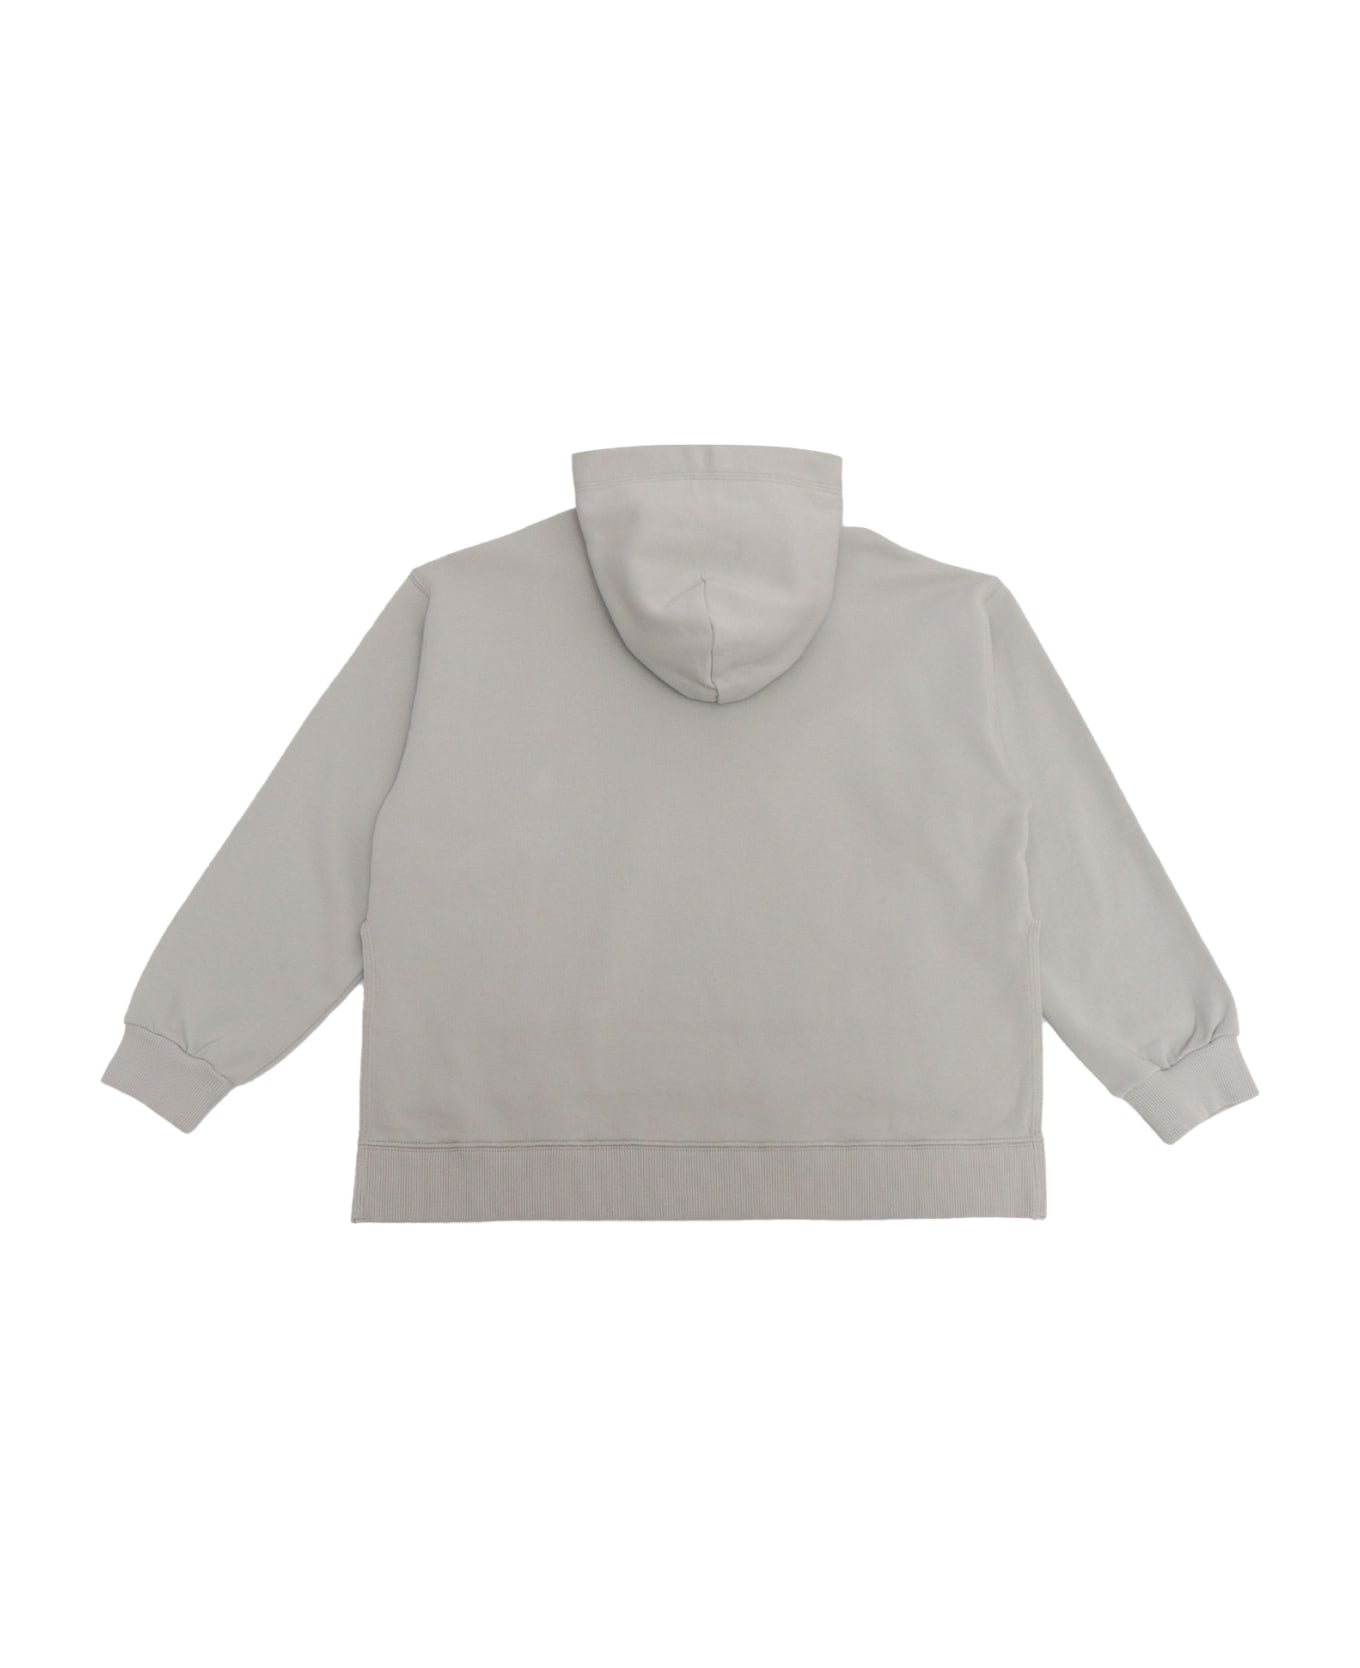 MM6 Maison Margiela Gray Sweatshirt With Print - GREY